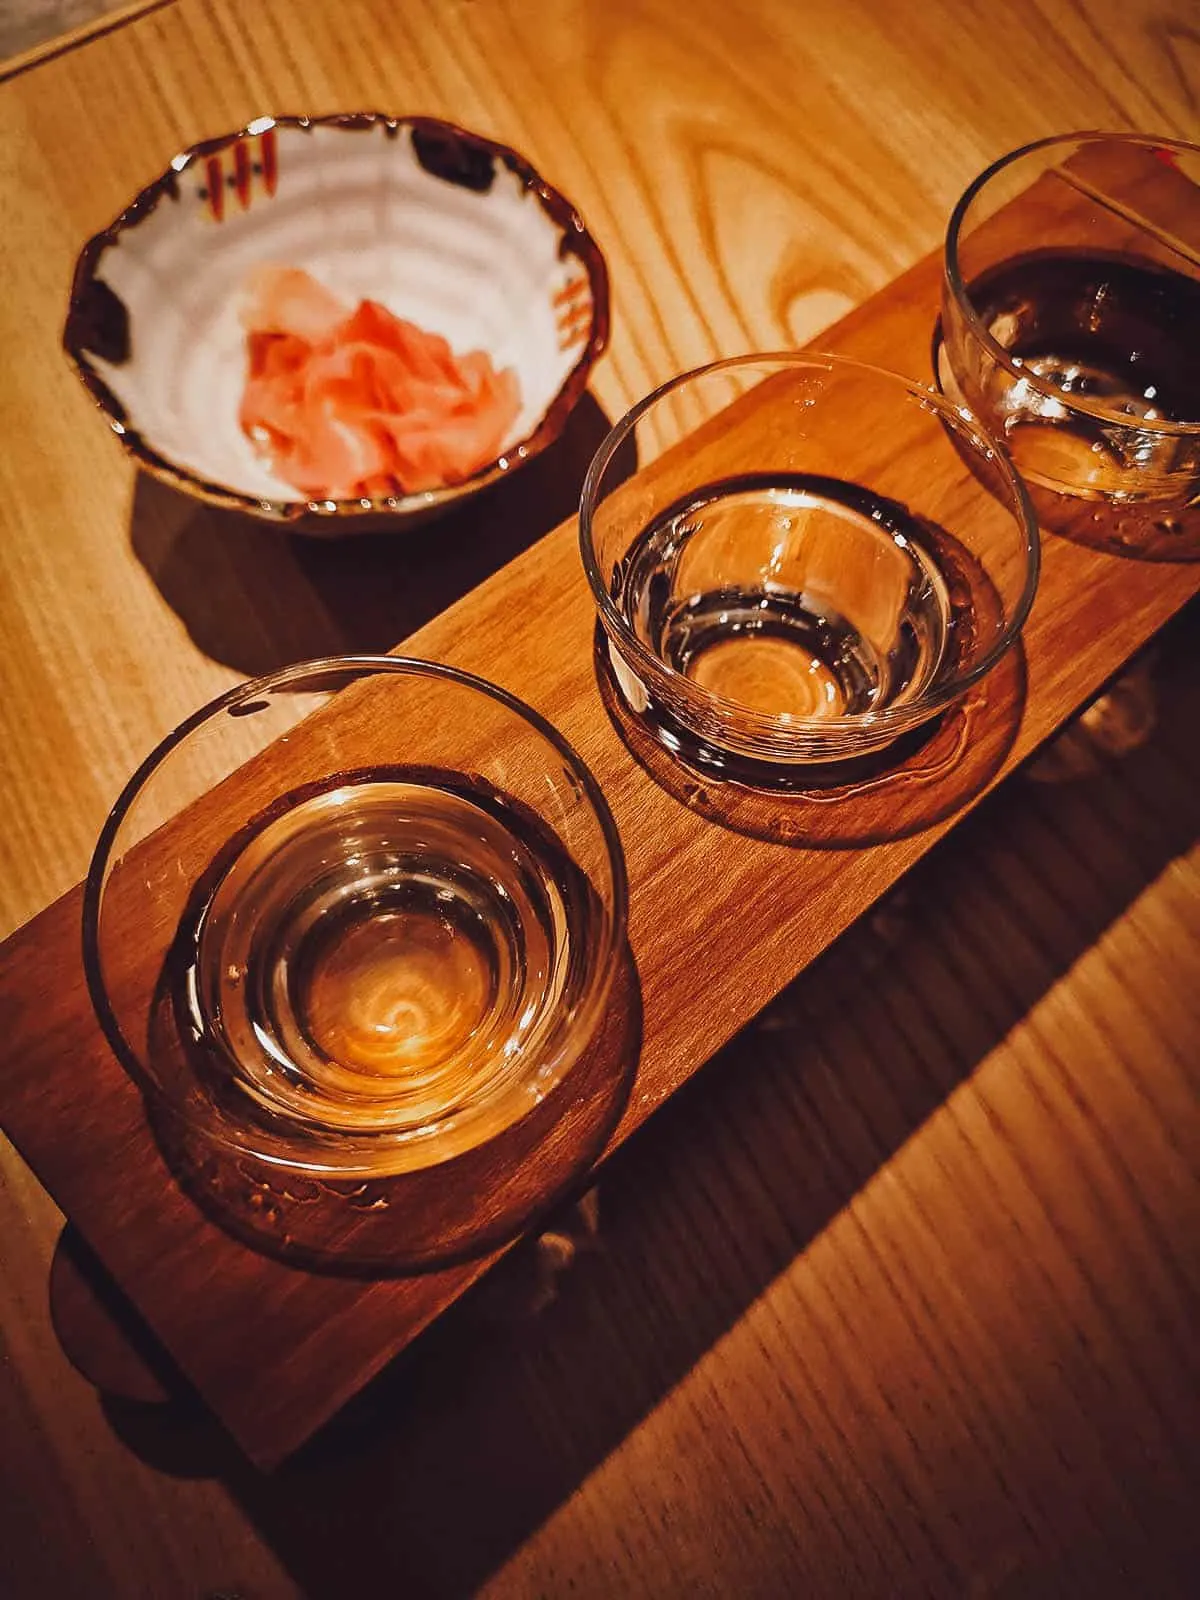 Flight of sake with gari or pickled ginger